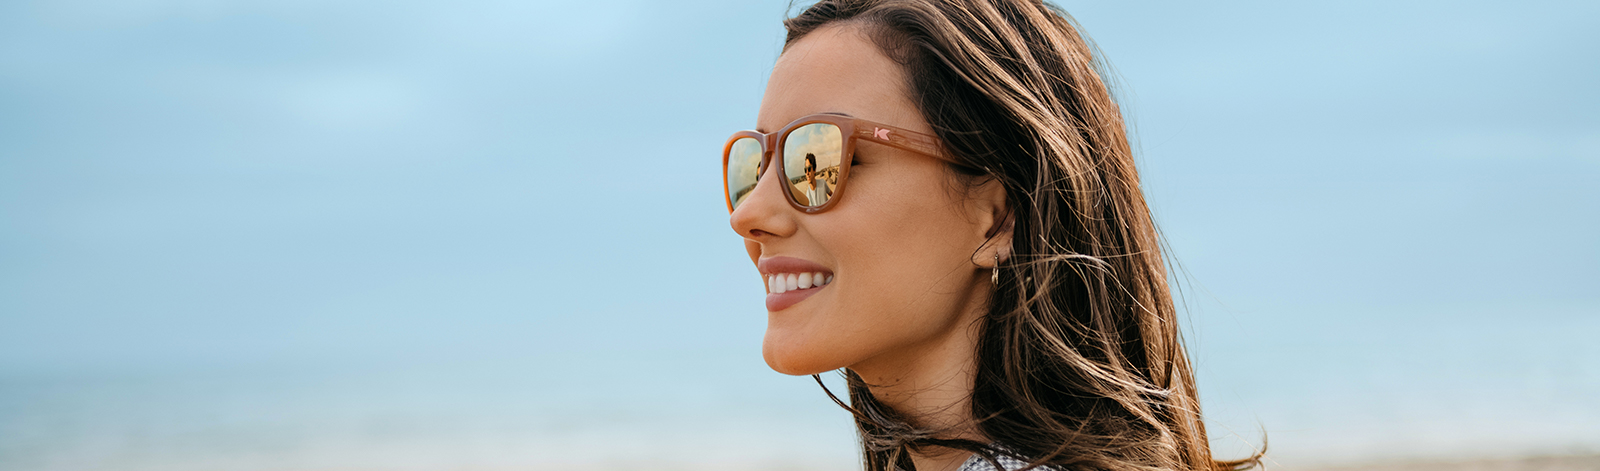 Top polarized sunglasses for women